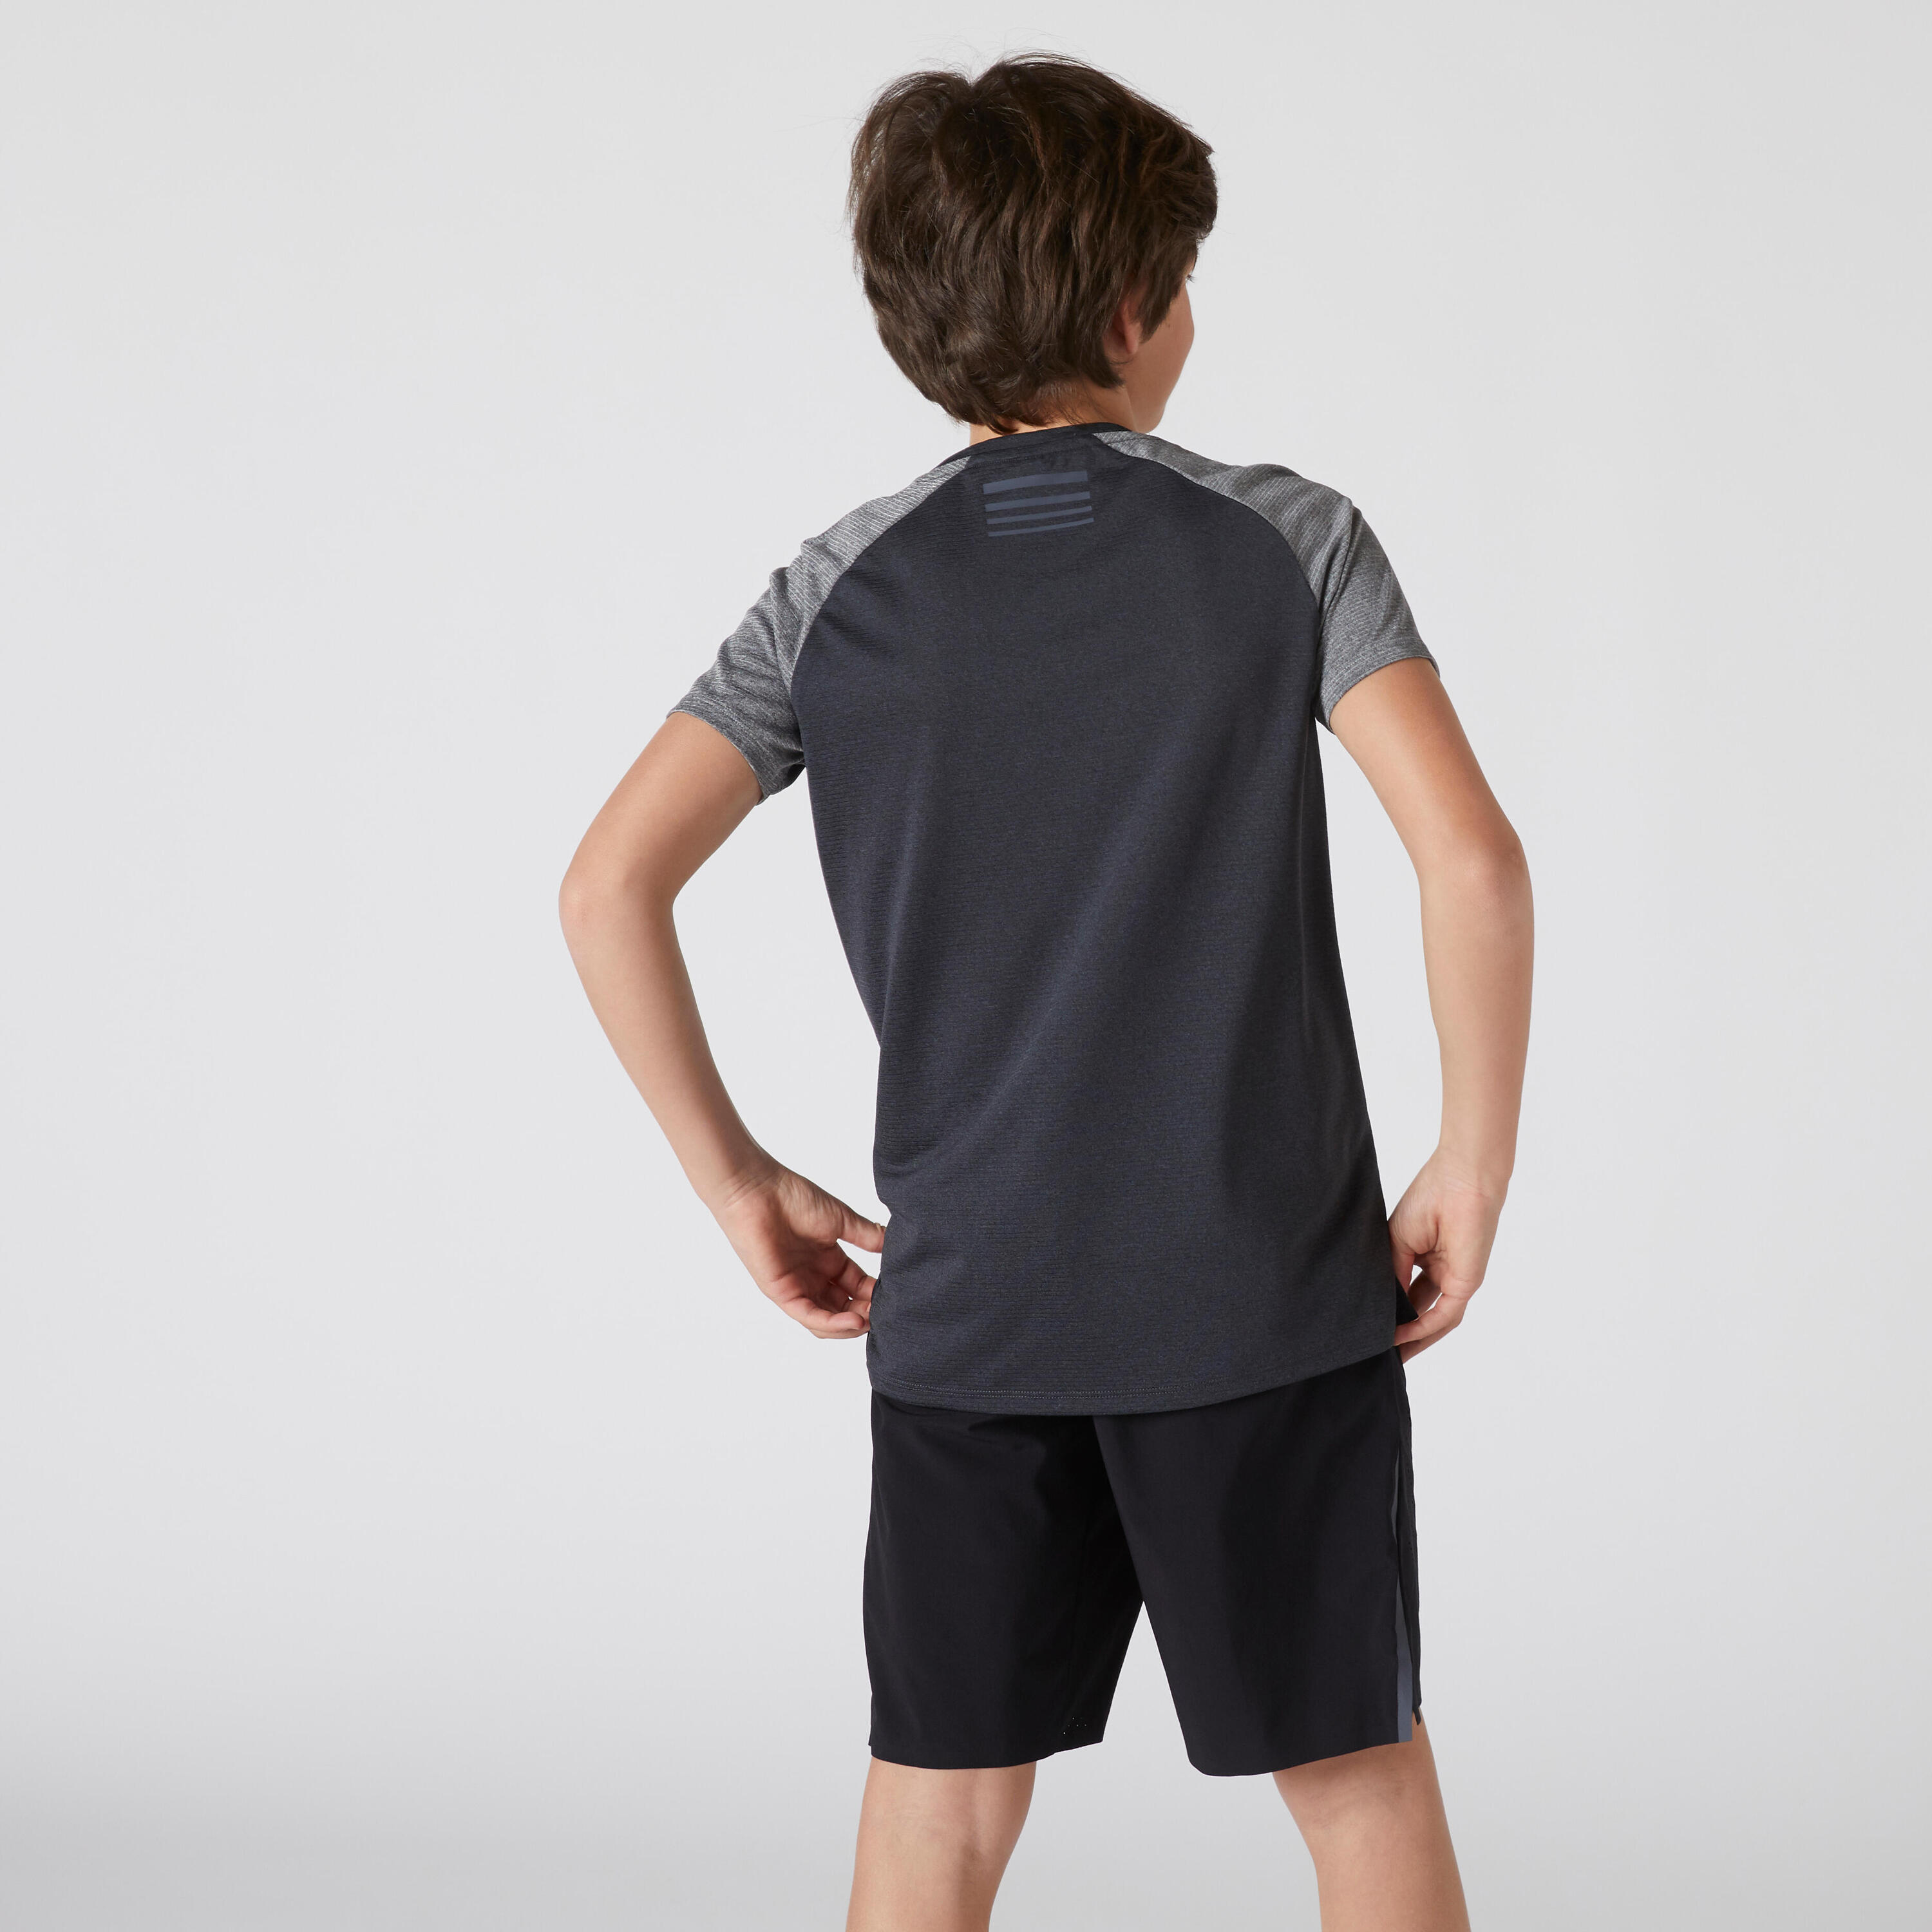 Kids' Technical Breathable T-Shirt S580 - Black 2/6